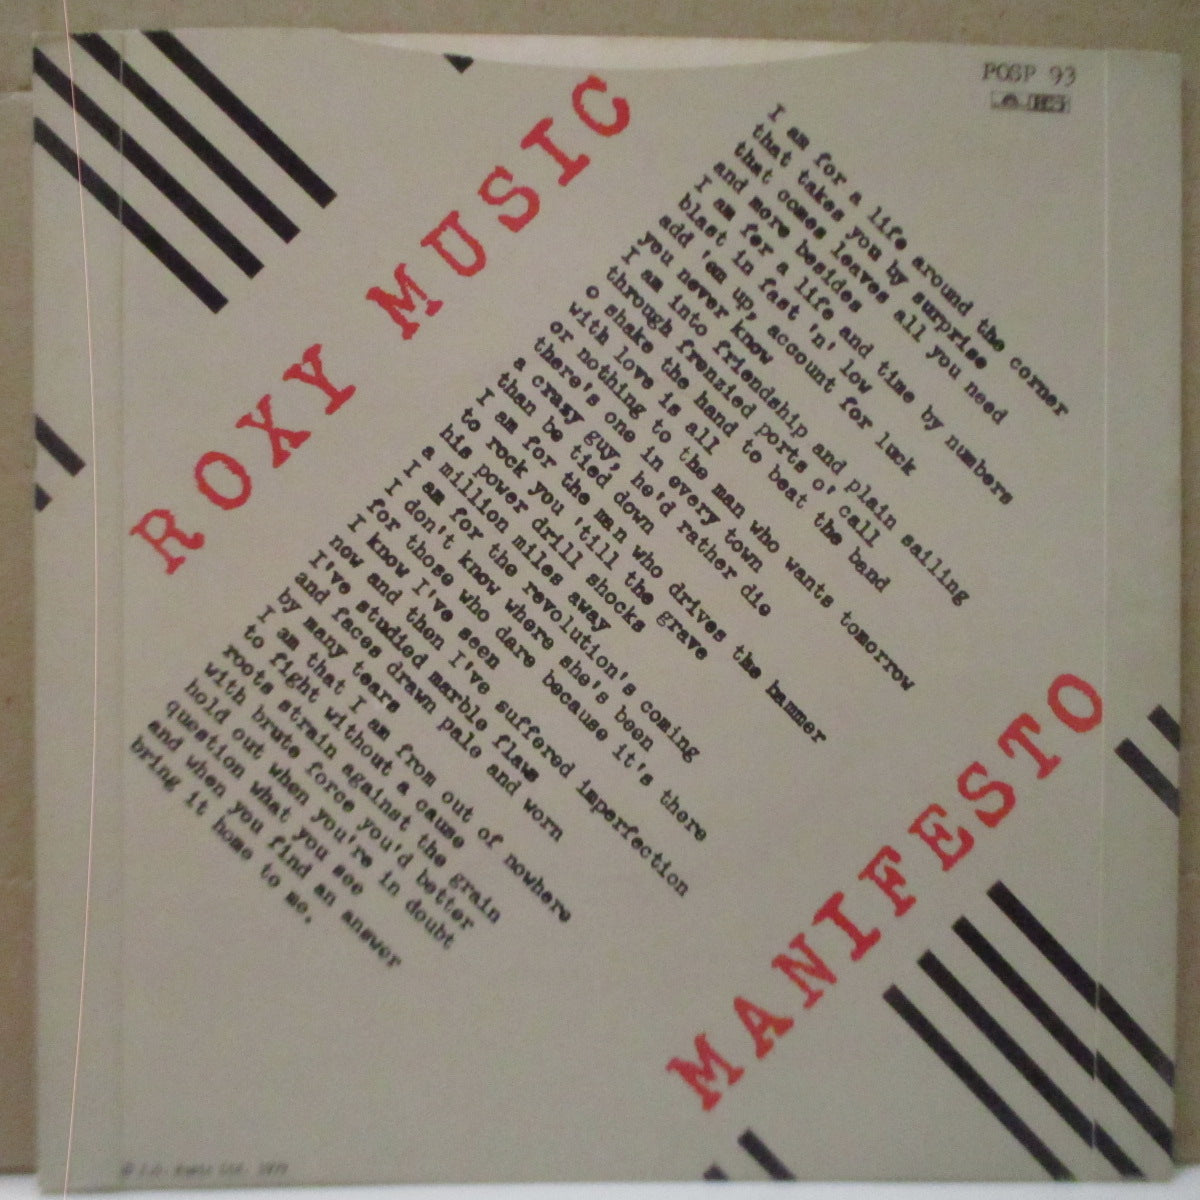 ROXY MUSIC - Over You (UK Orig.7"+Glossy Hard PS)